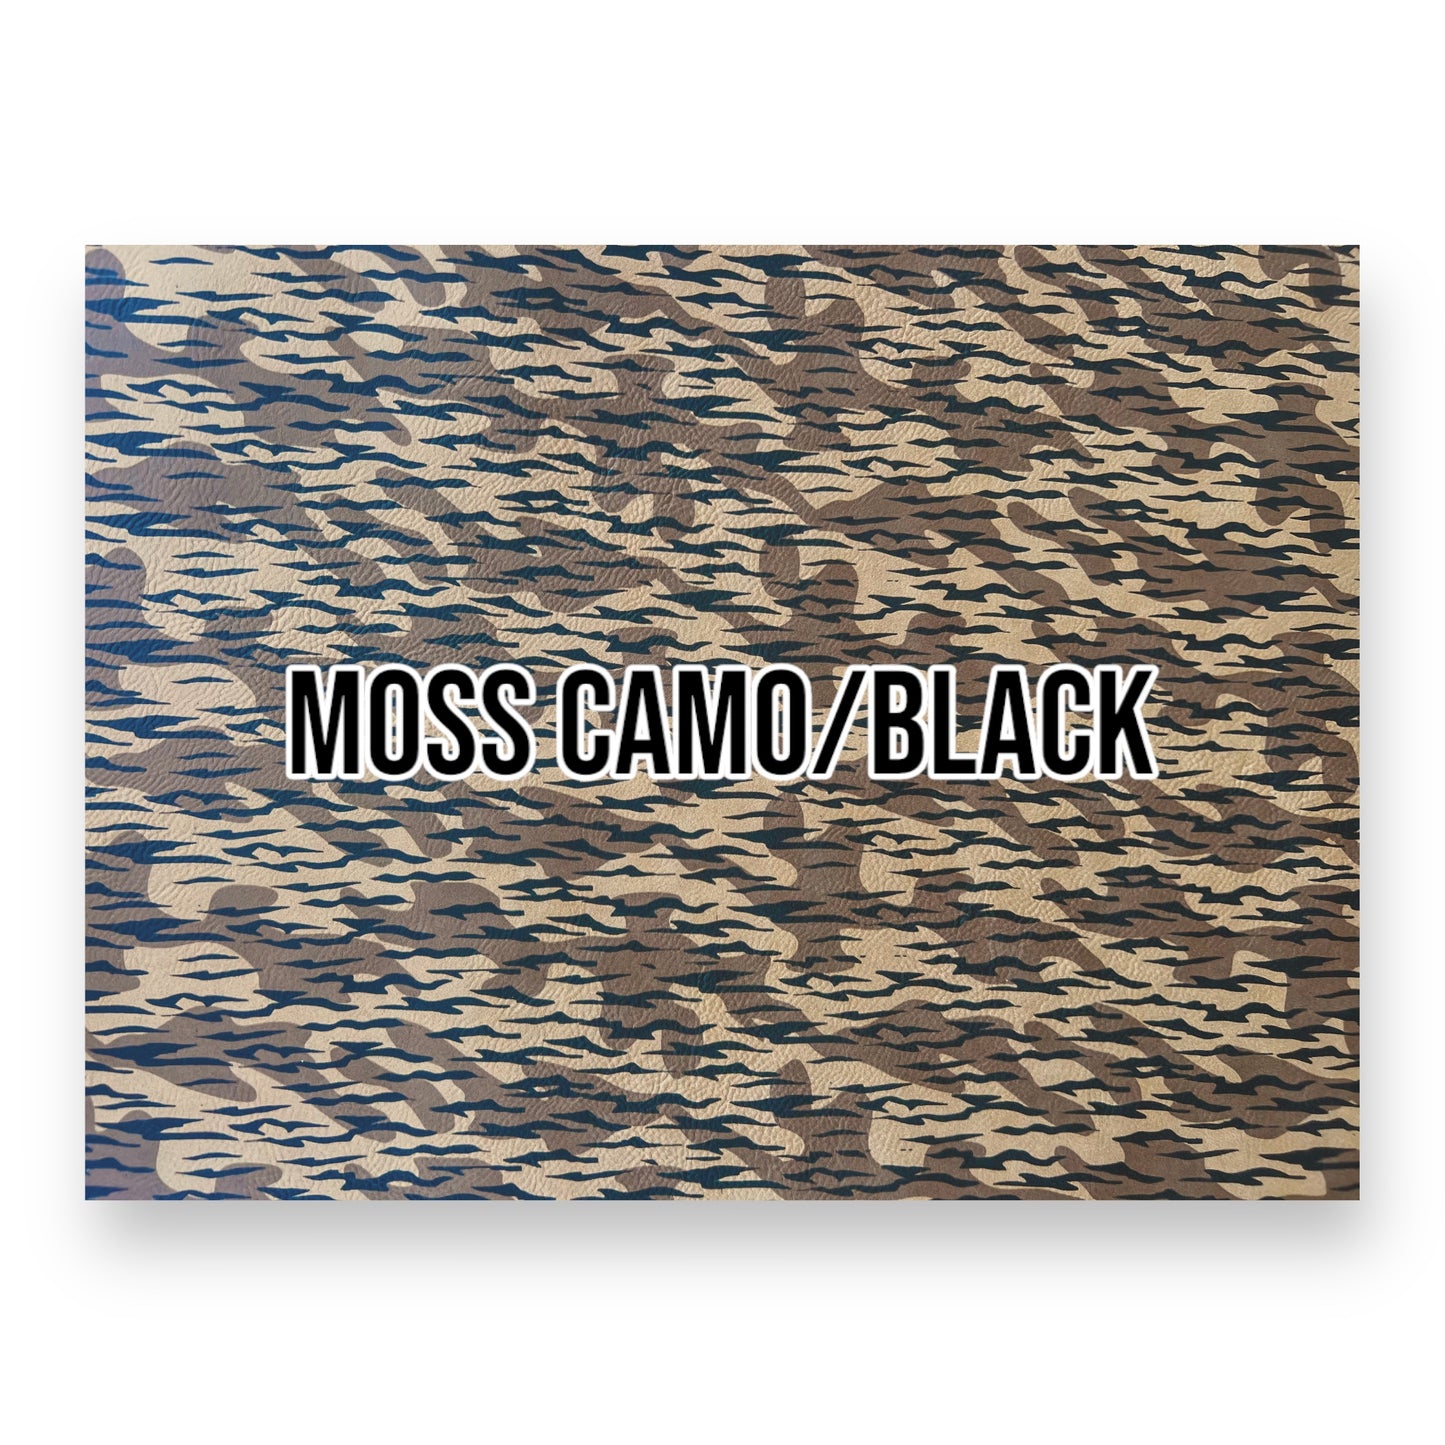 MOSS CAMO/BLACK HYDBOND LEATHERETTE SHEET (12"x24")